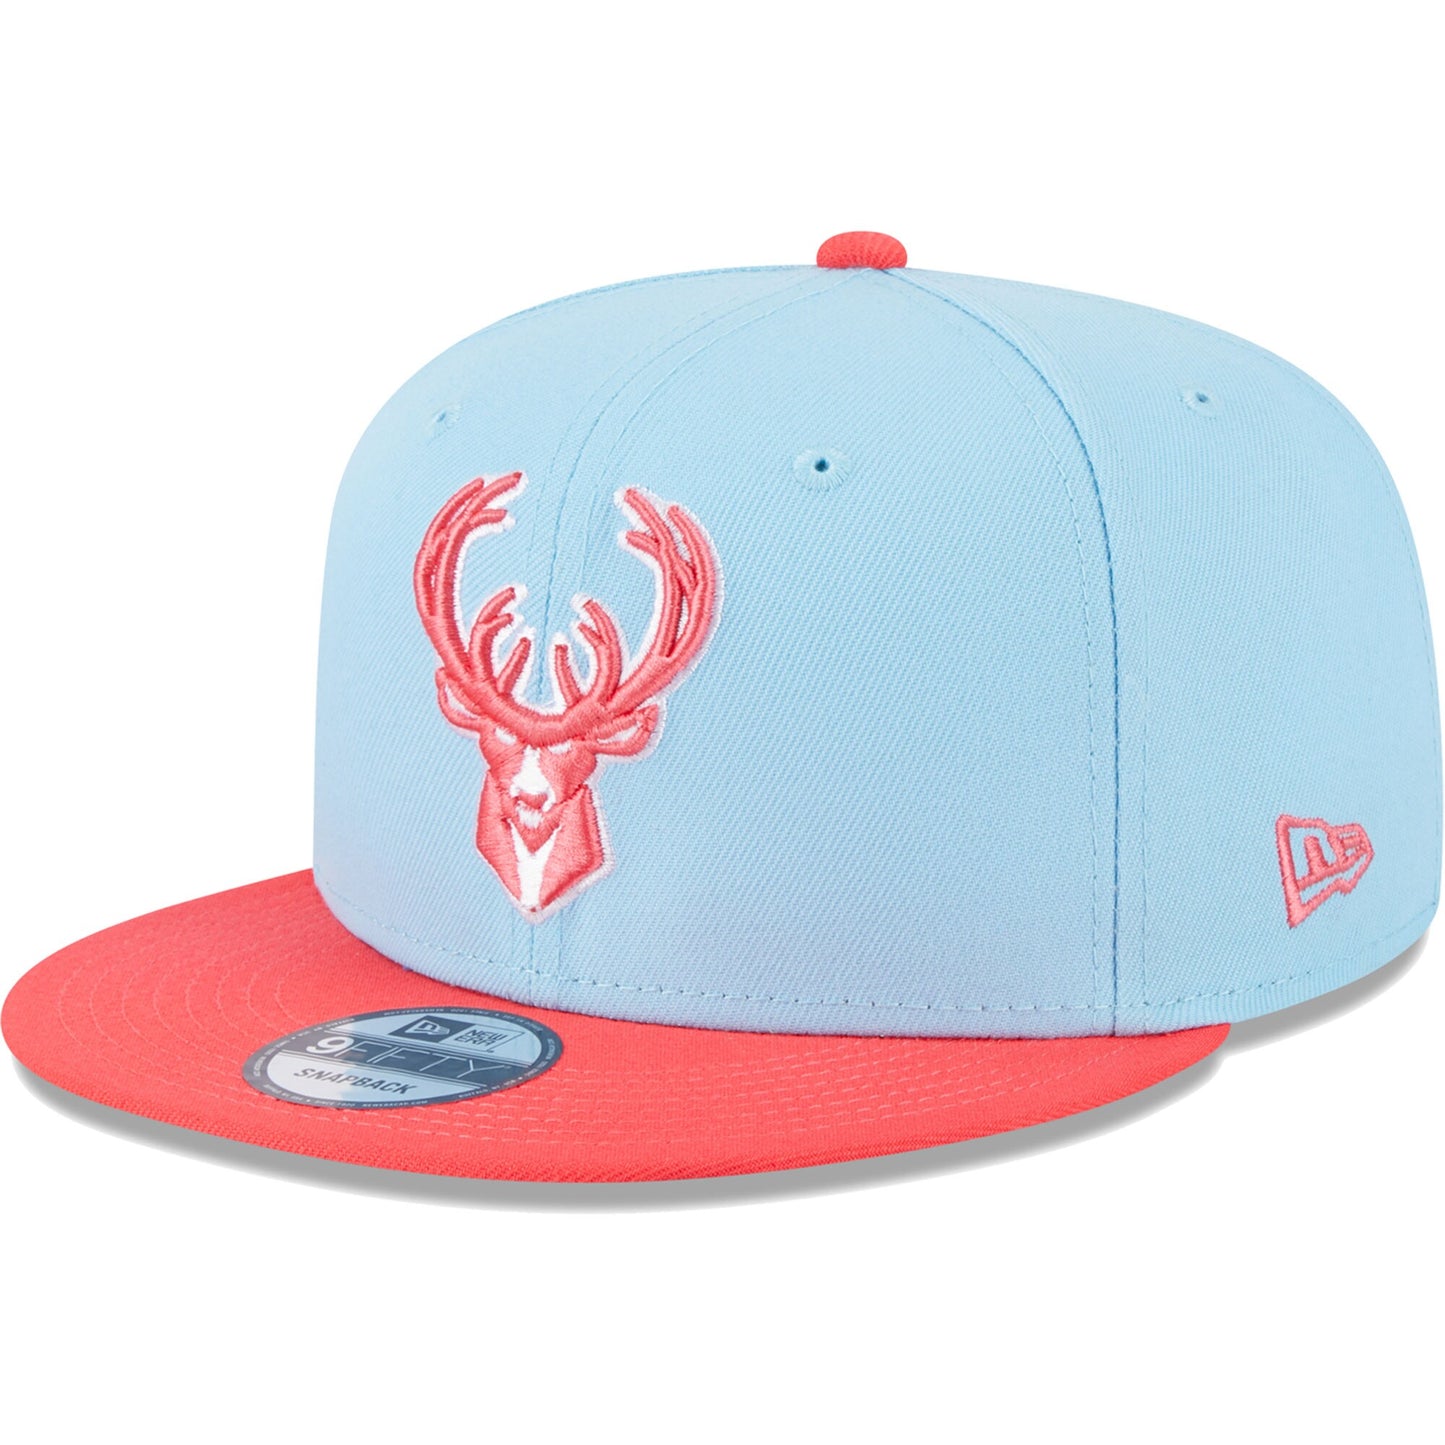 Milwaukee Bucks New Era 2-Tone Color Pack 9FIFTY Snapback Hat - Powder Blue/Red